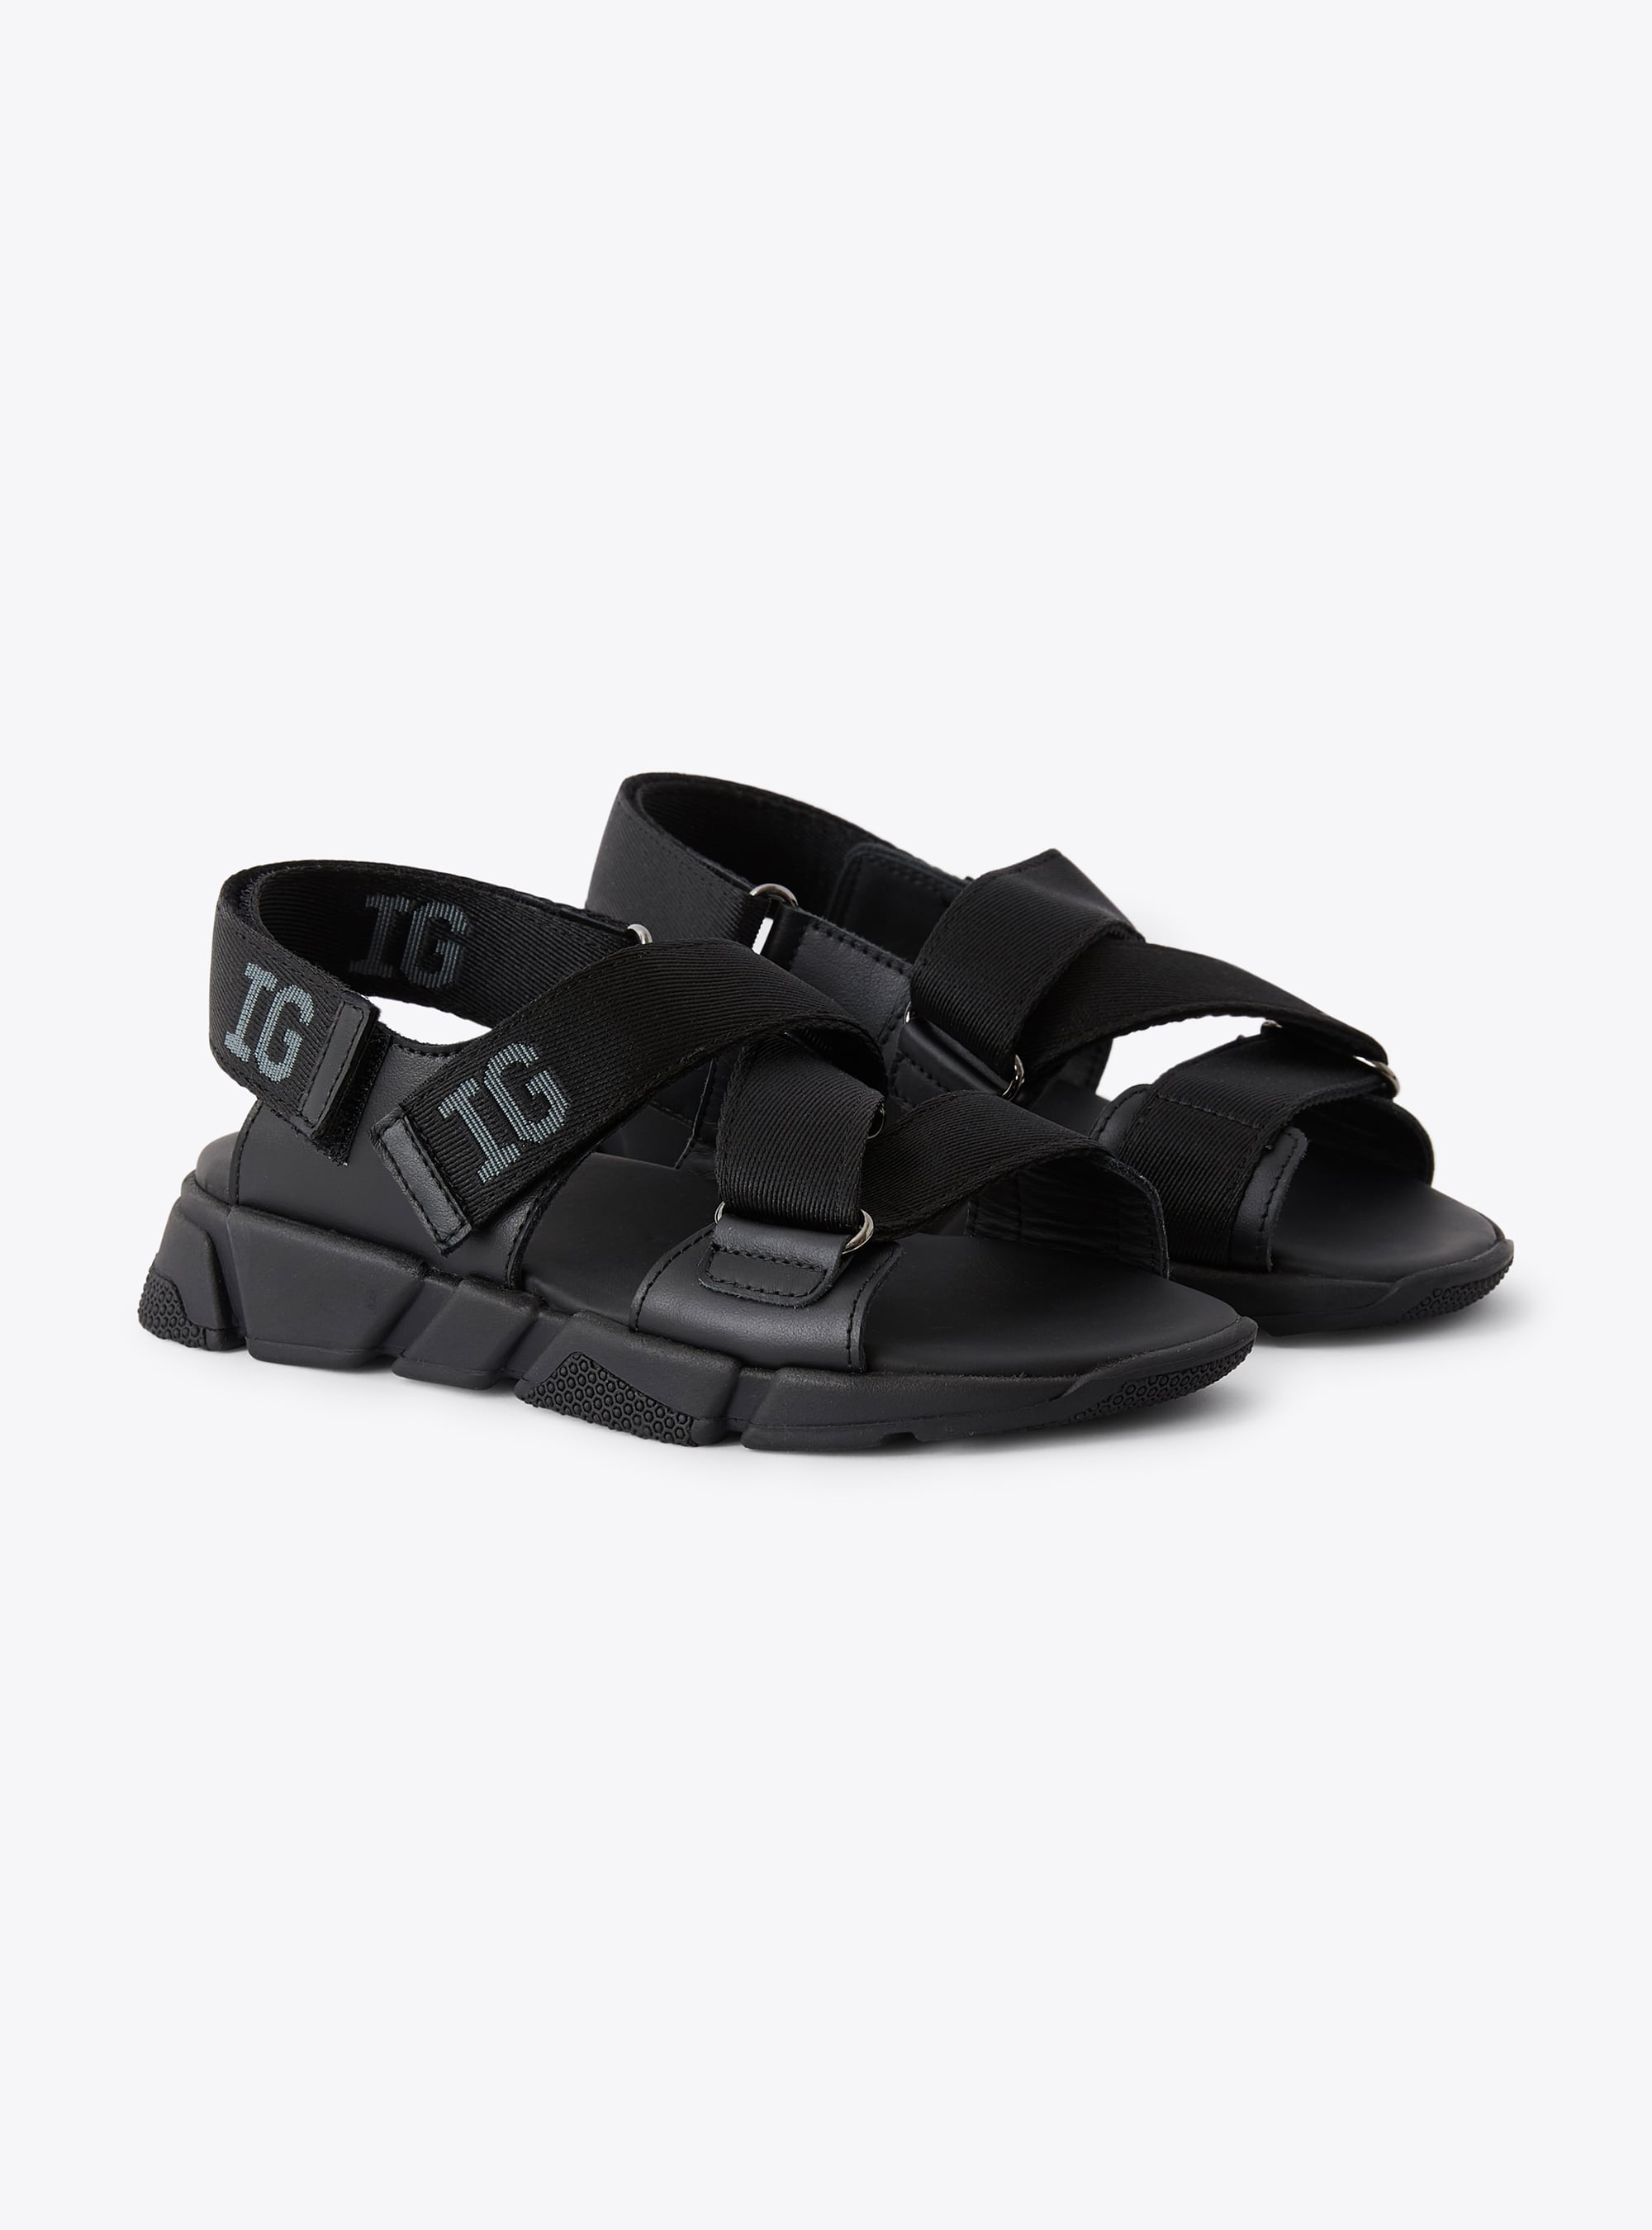 IG sandal in black nappa - Shoes - Il Gufo